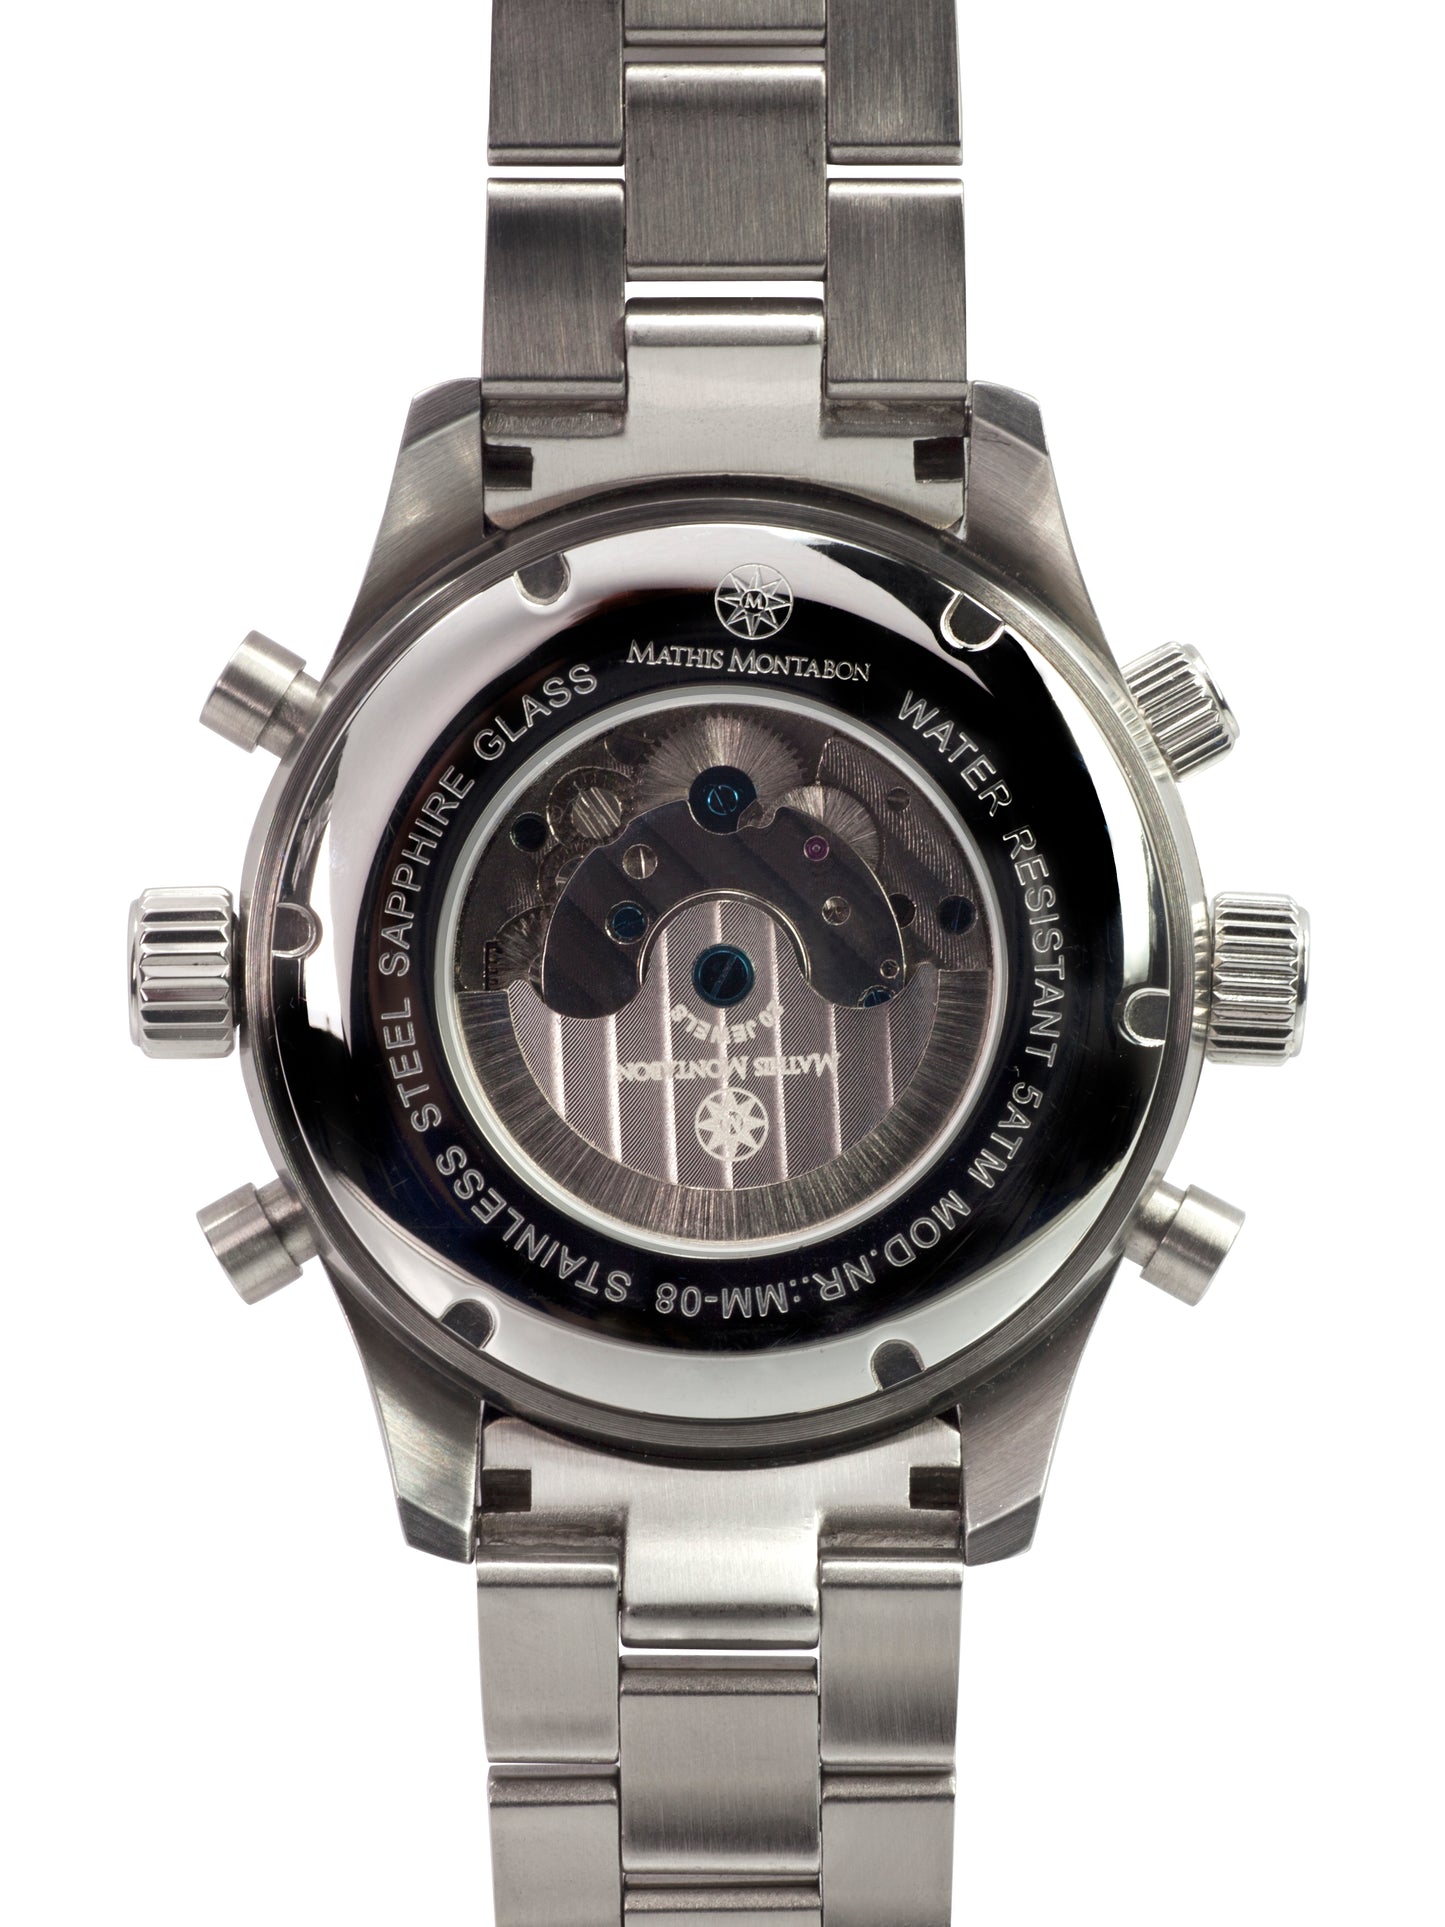 Automatic watches — Globe Trotter — Mathis Montabon — schwarz weiss